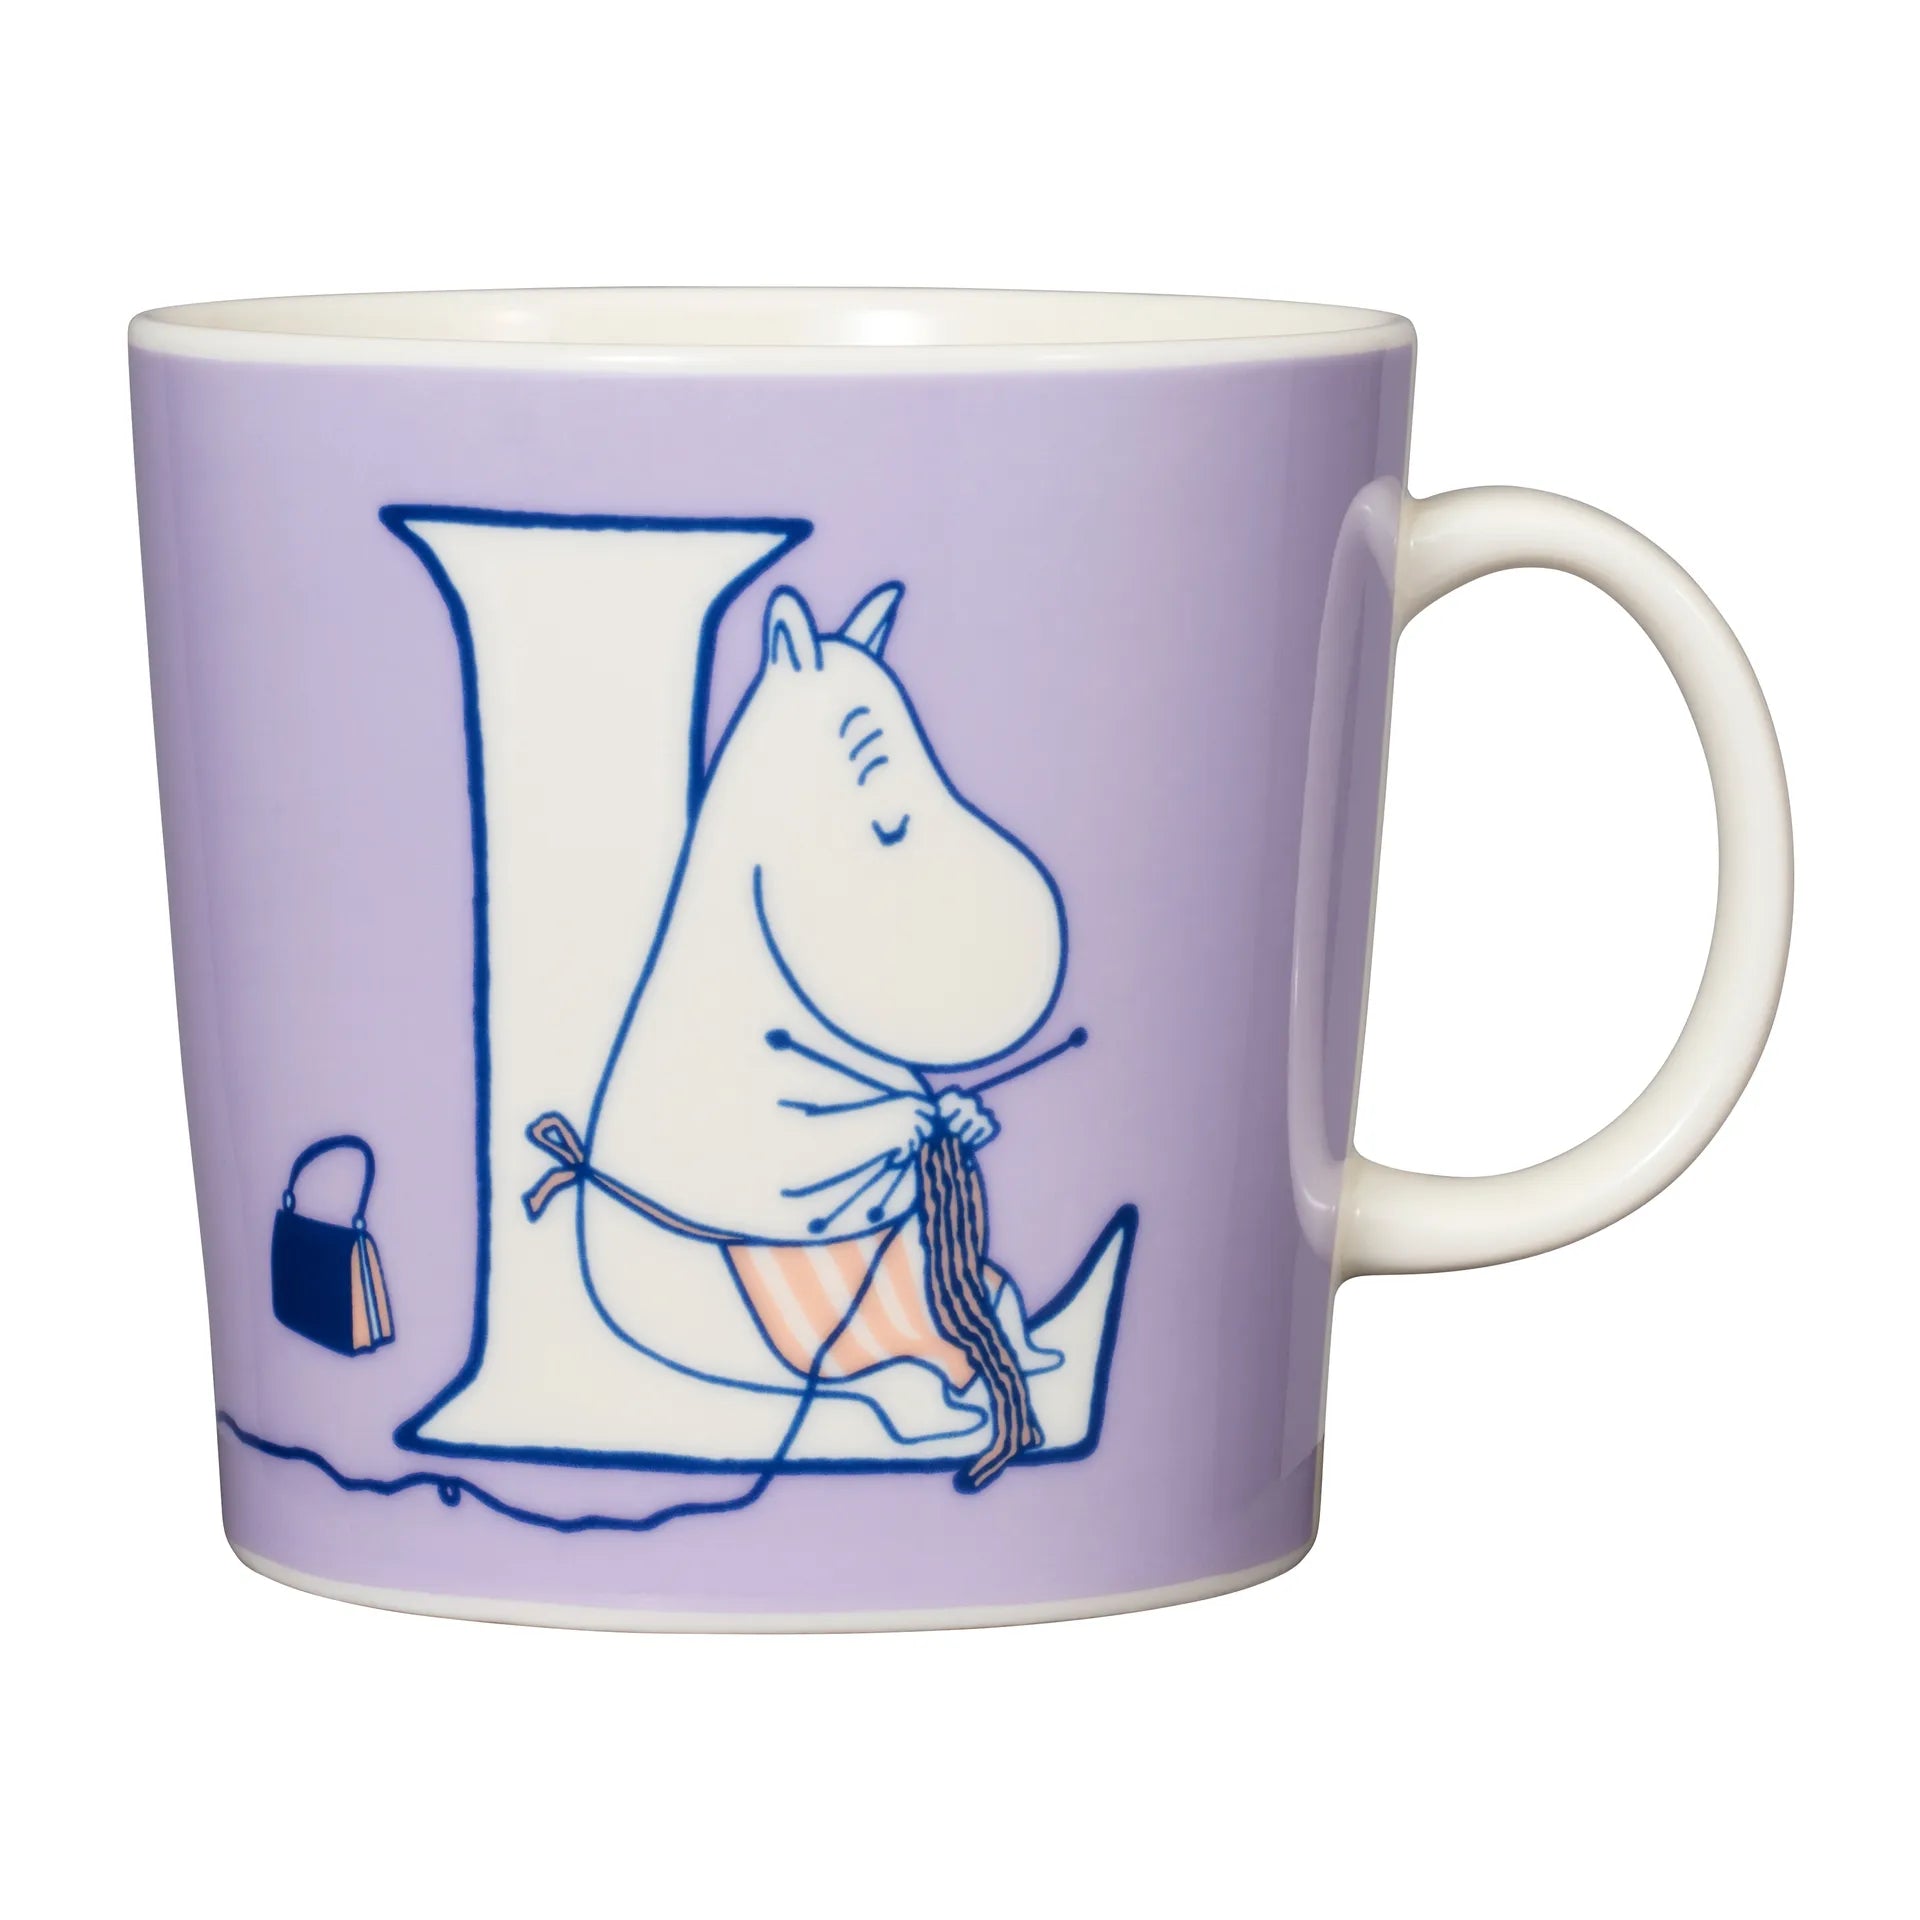 Moomin mug special LARGE 400ml ABC Moomin mug 40 cl L